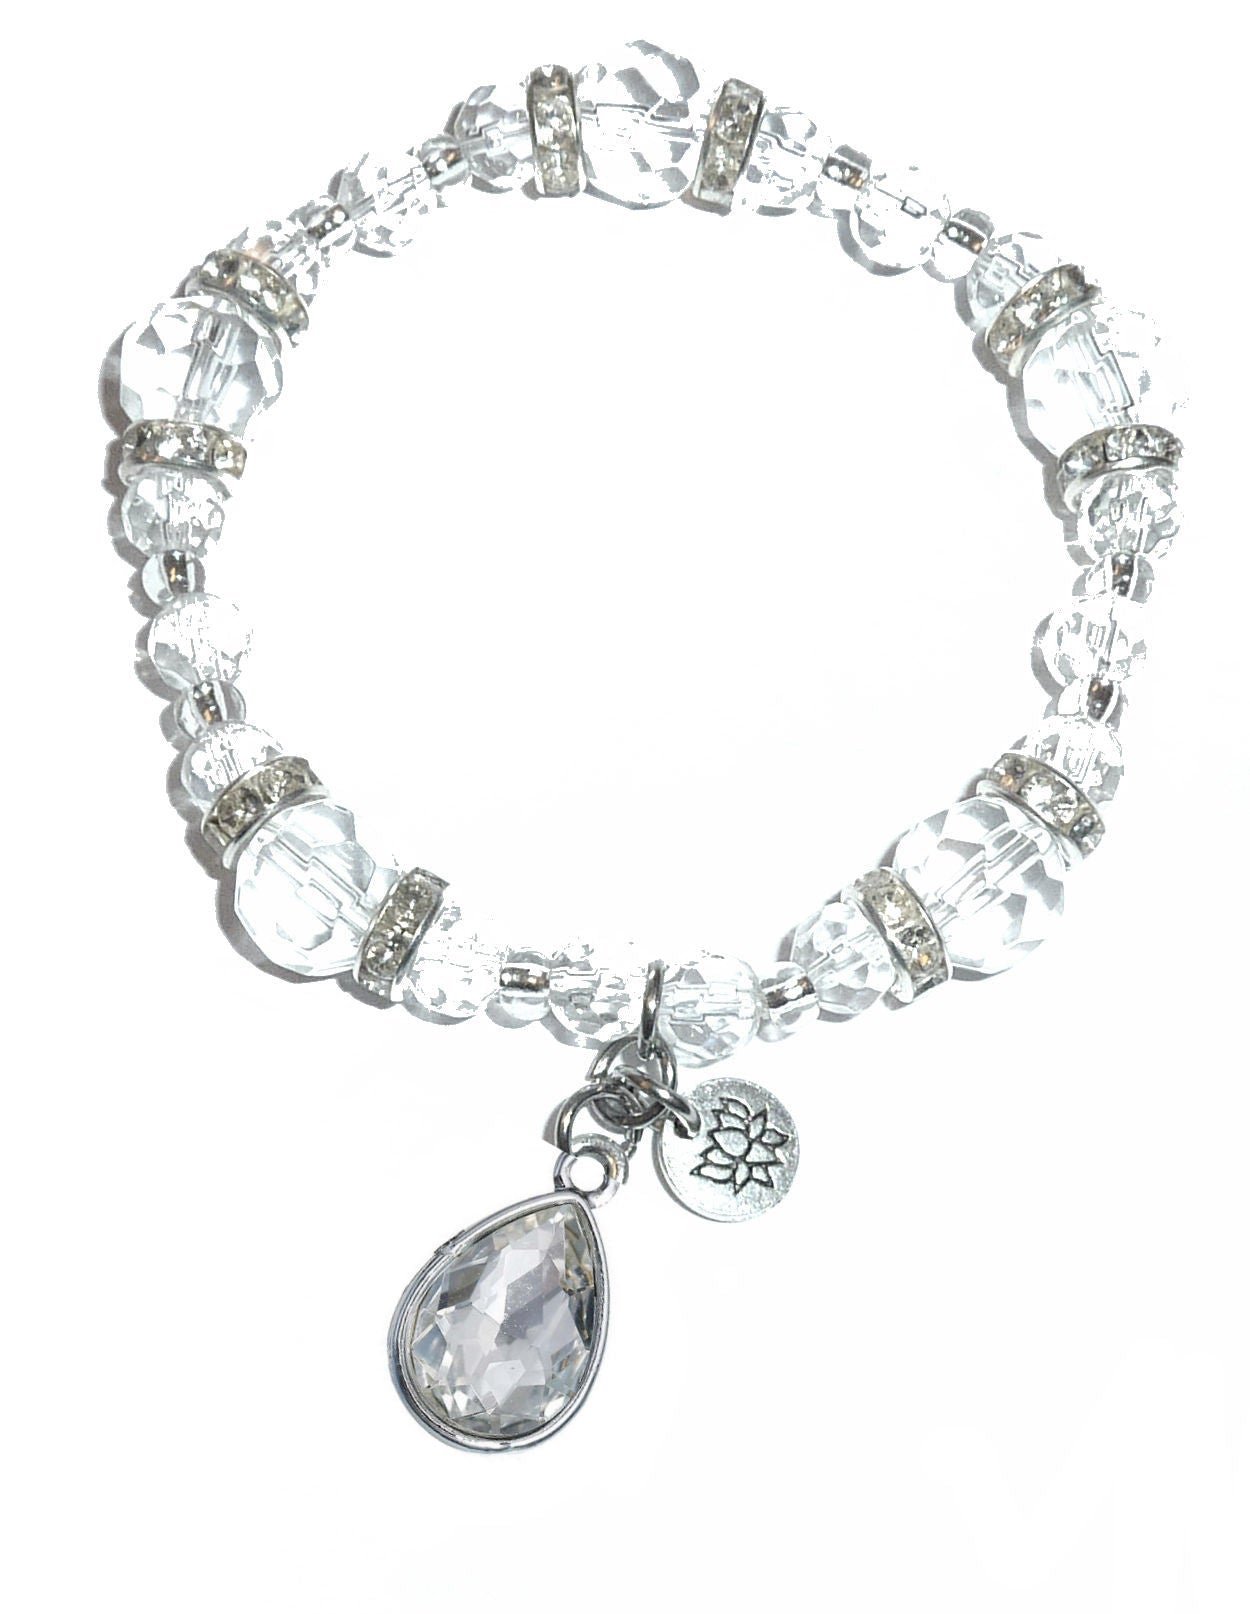 Apil Birthstone Charm Bracelet - Crystal Stretch